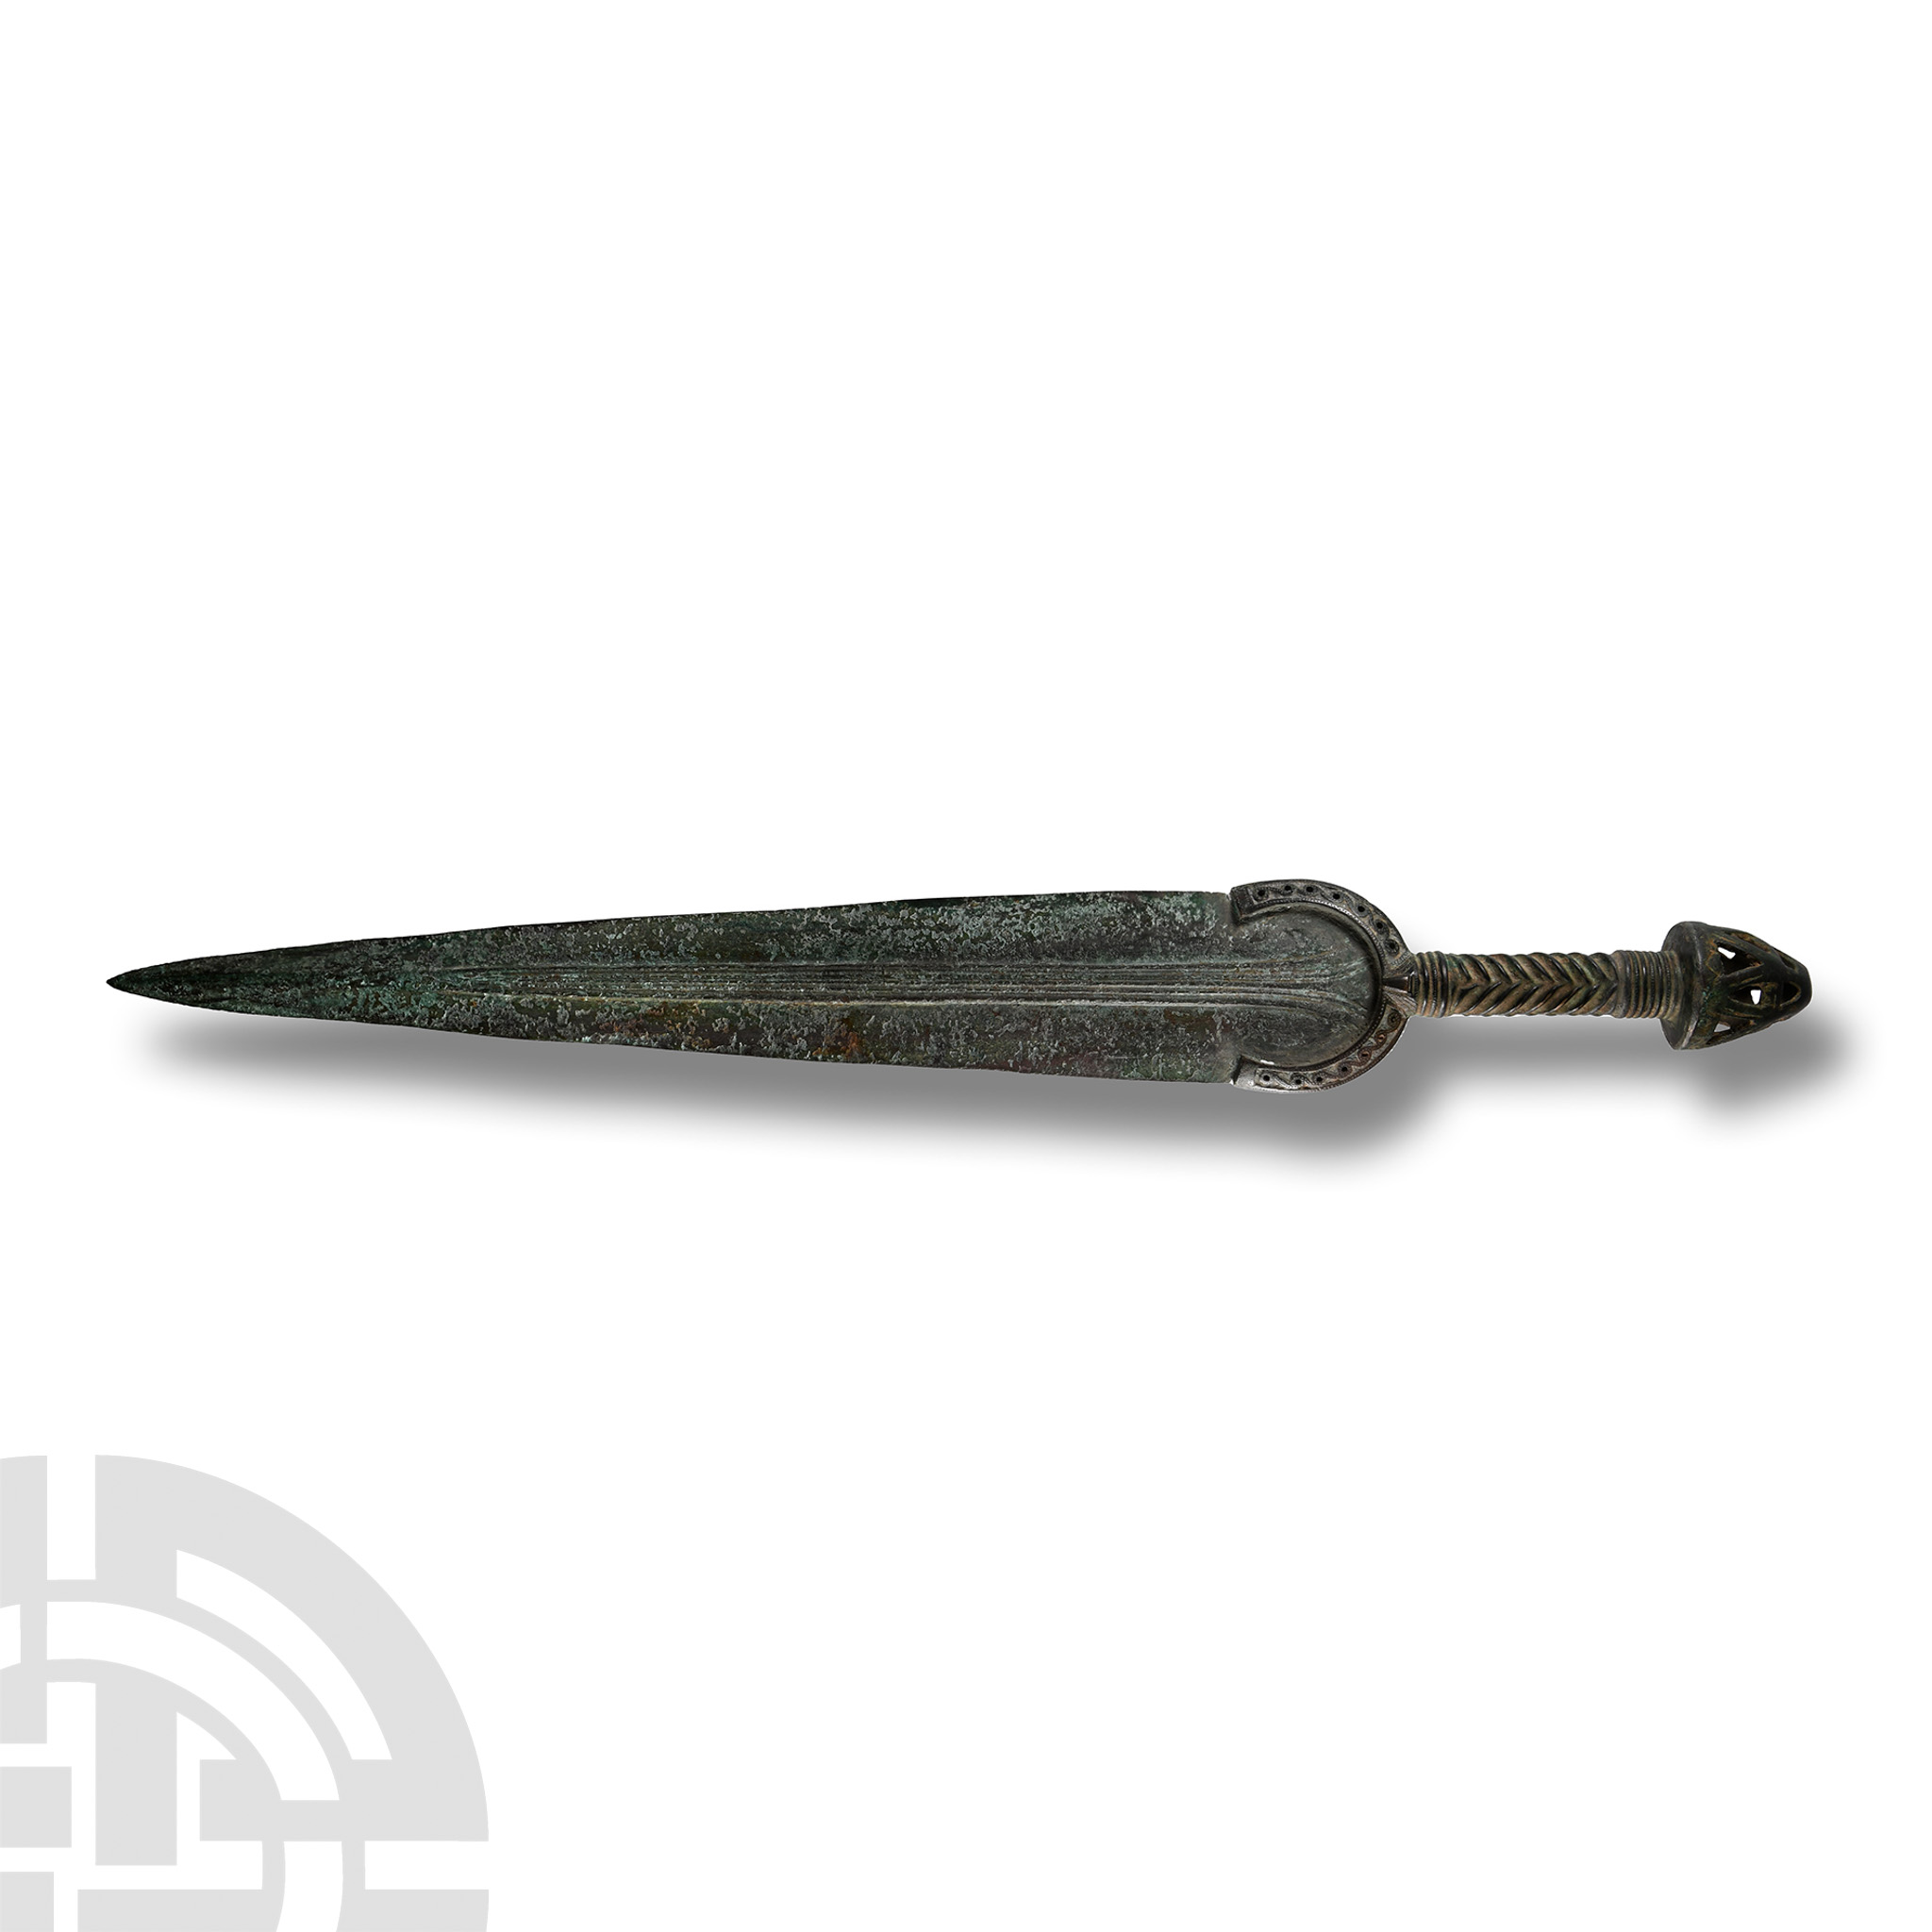 North-West Persian Bronze Short Sword with Mushroom Pommel - Image 2 of 2